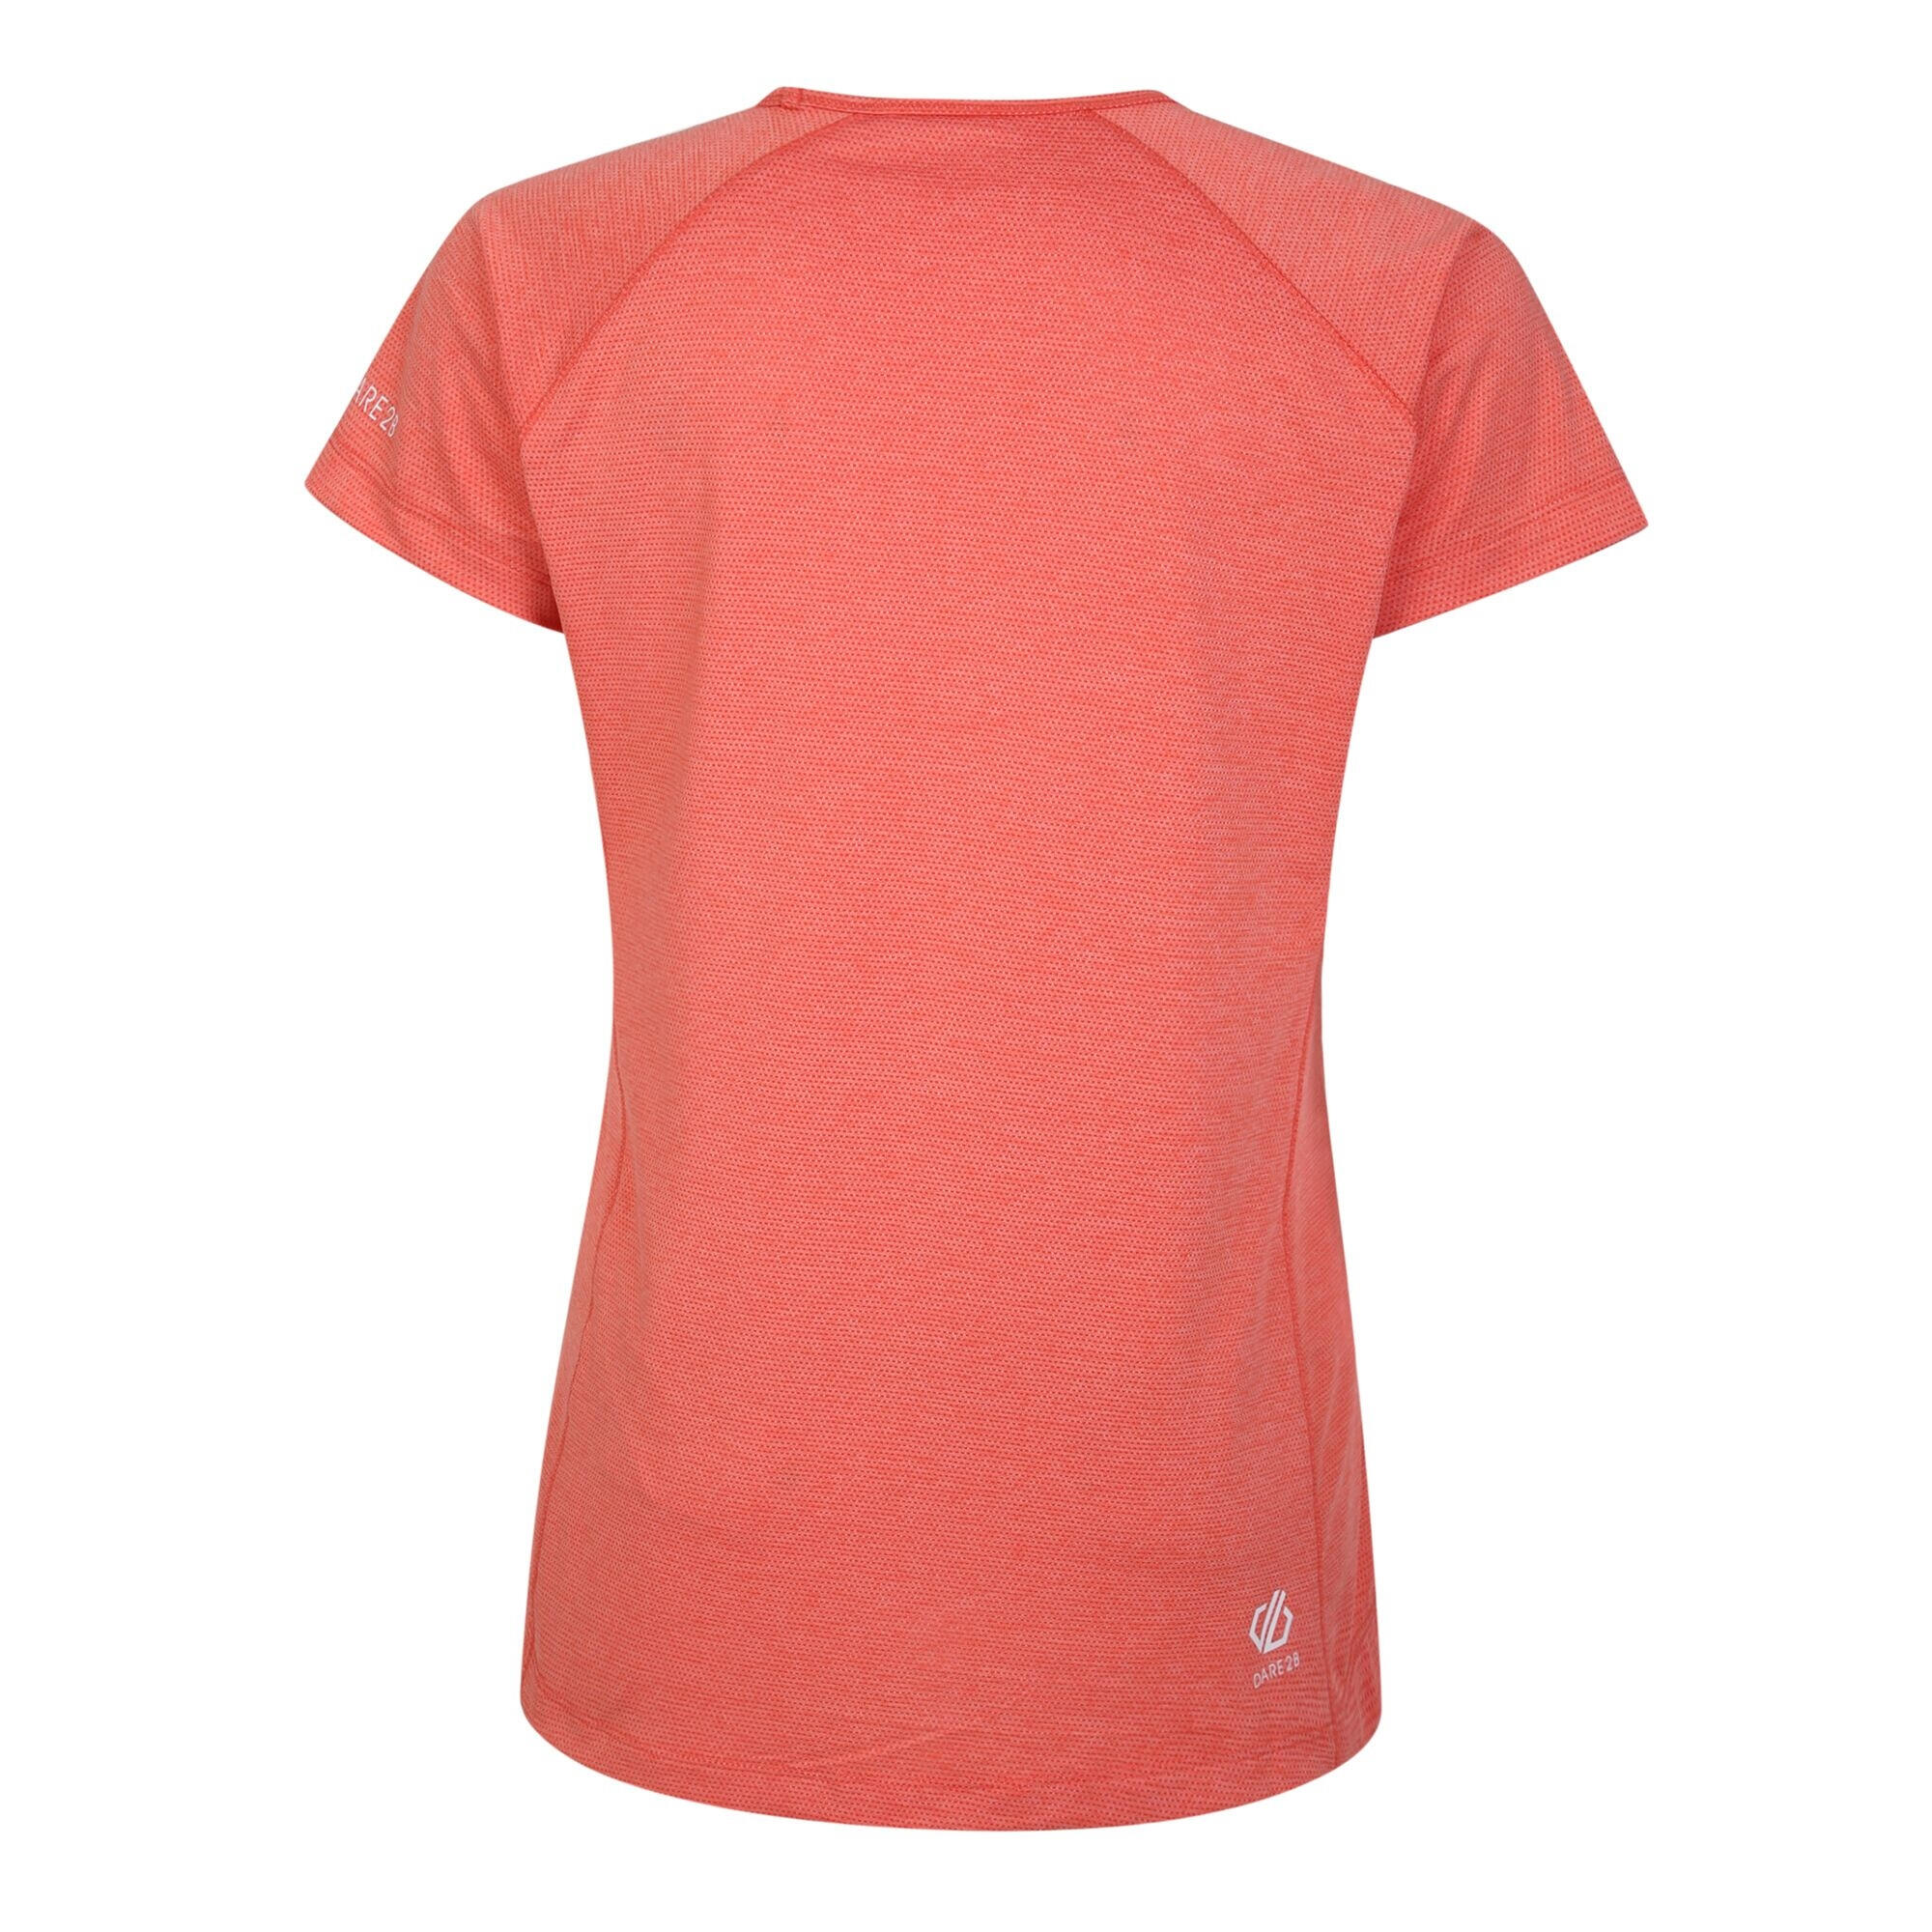 Womens/Ladies Corral Marl Lightweight TShirt (Neon Peach) 2/4